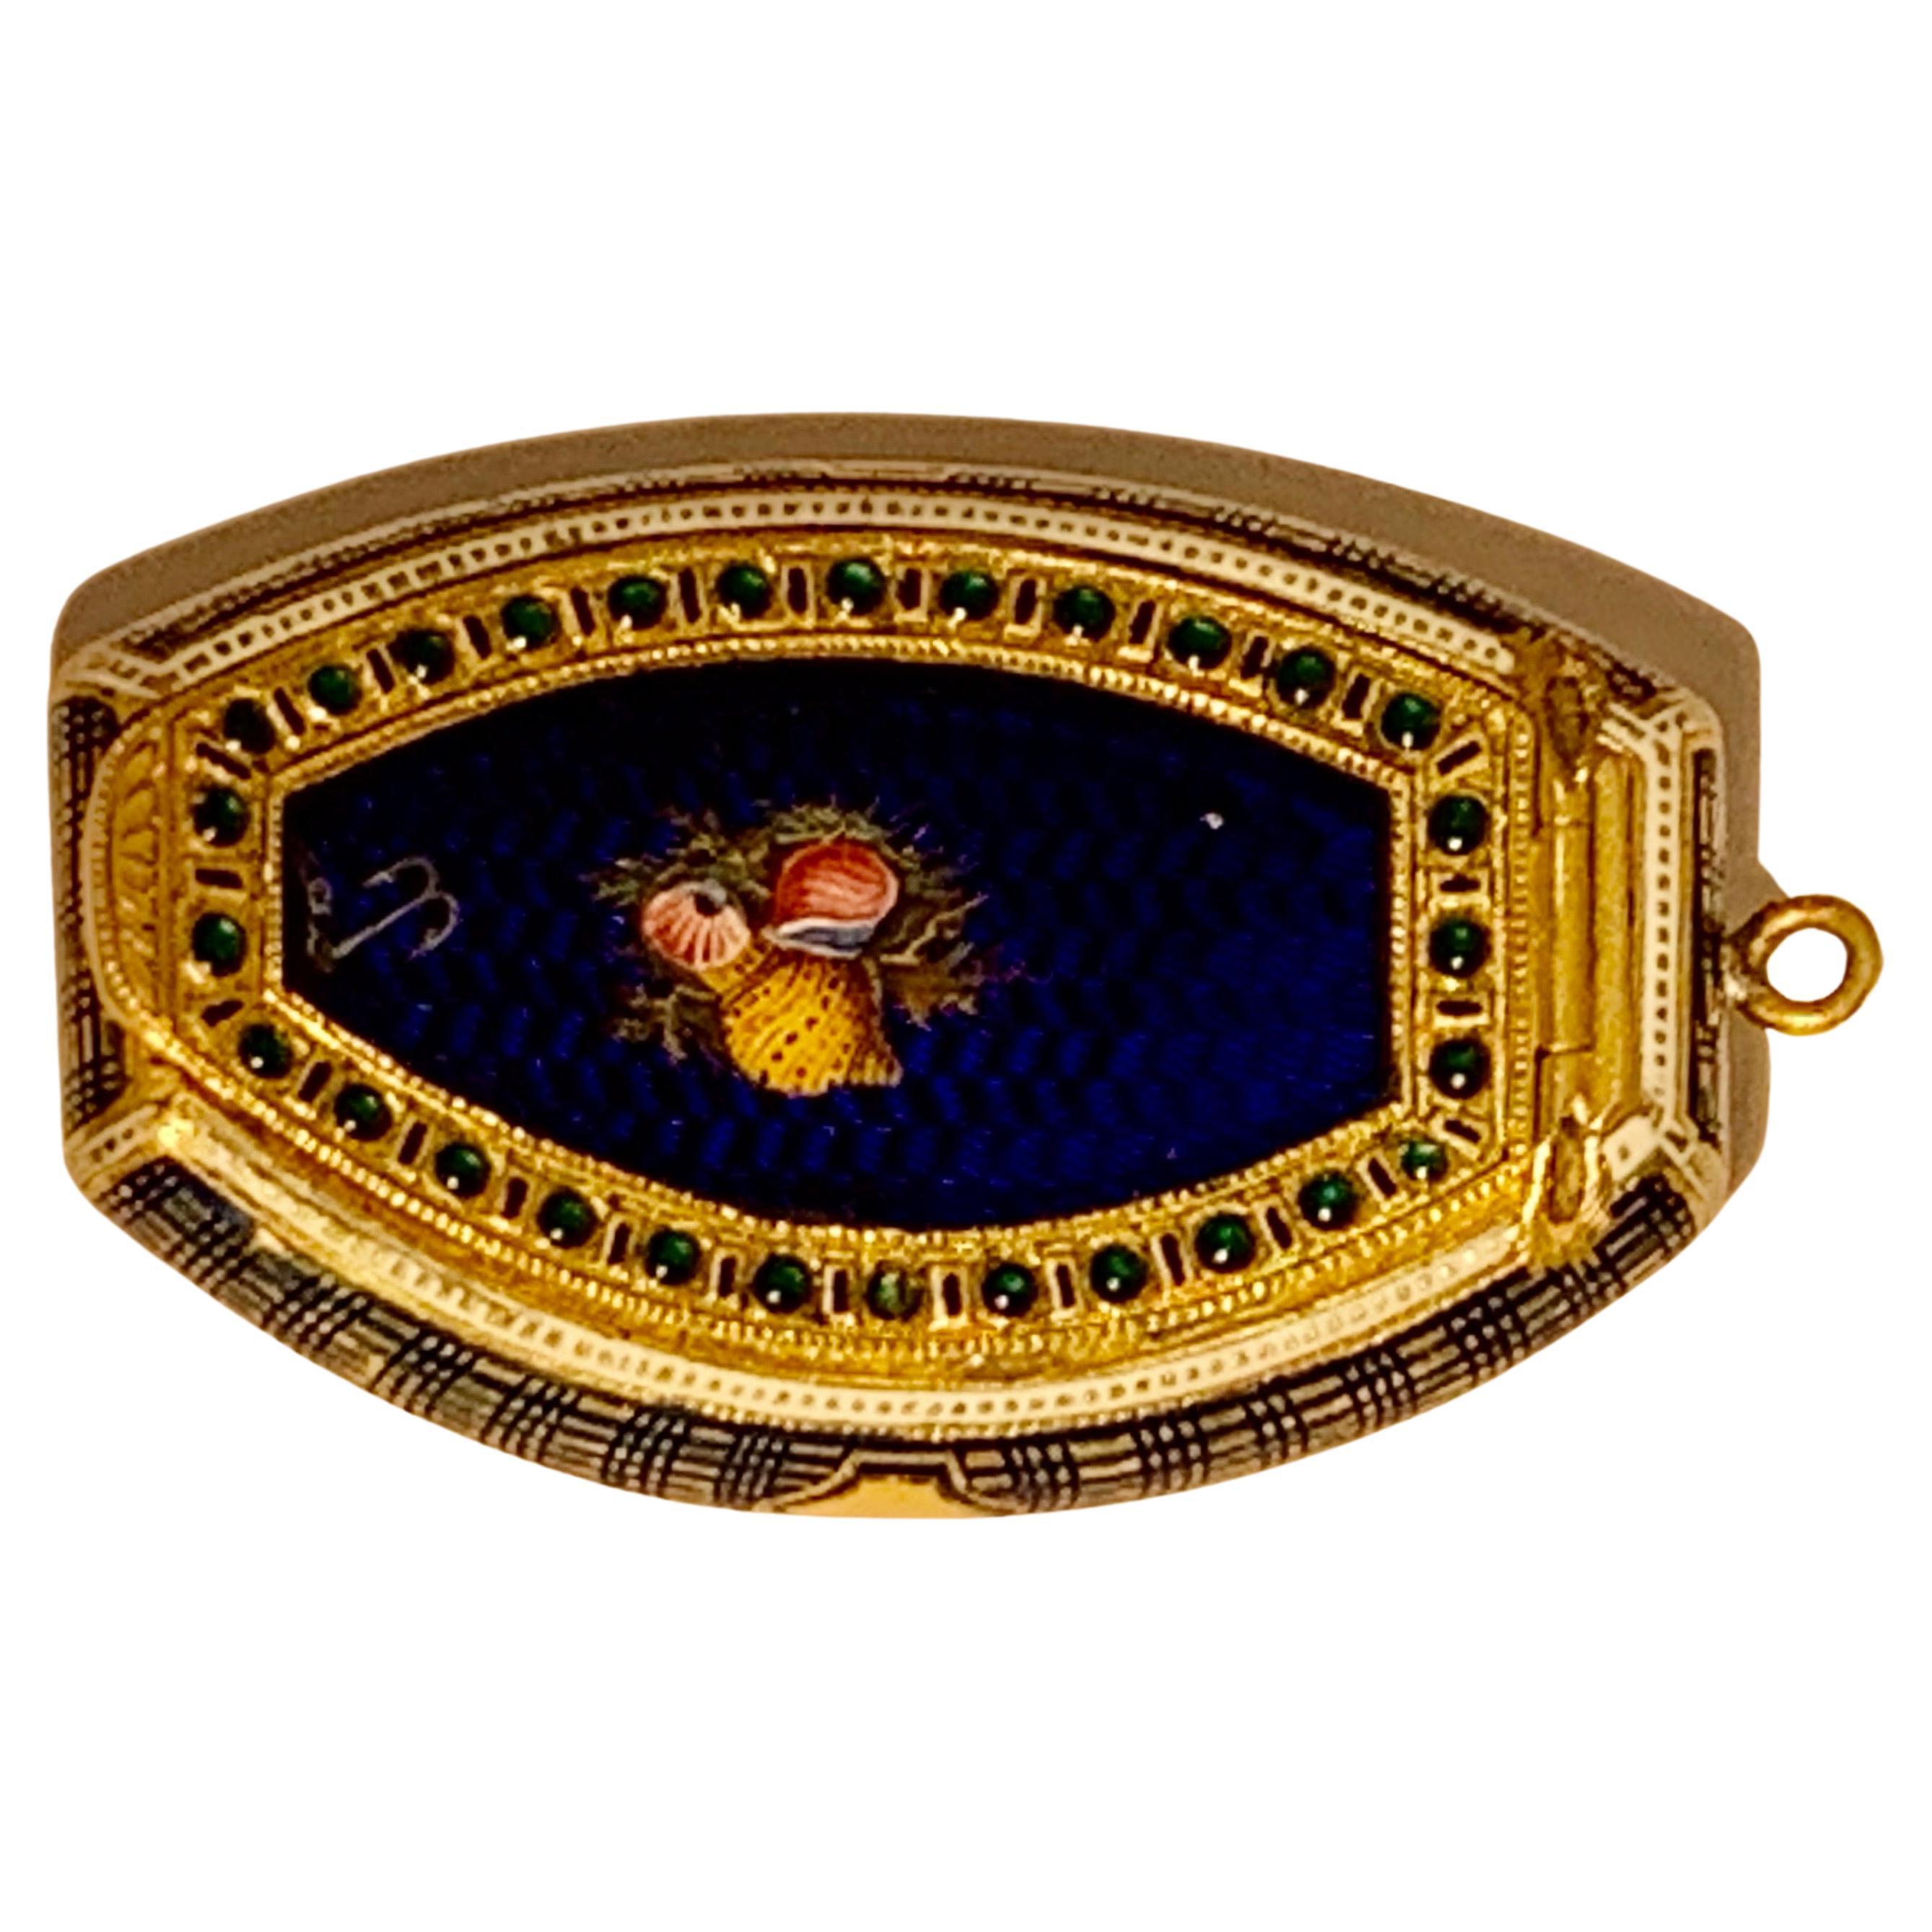 A Rare Antique Swiss Gold & Enamel Jewelled Vinaigrette Box Late 18th C For Sale